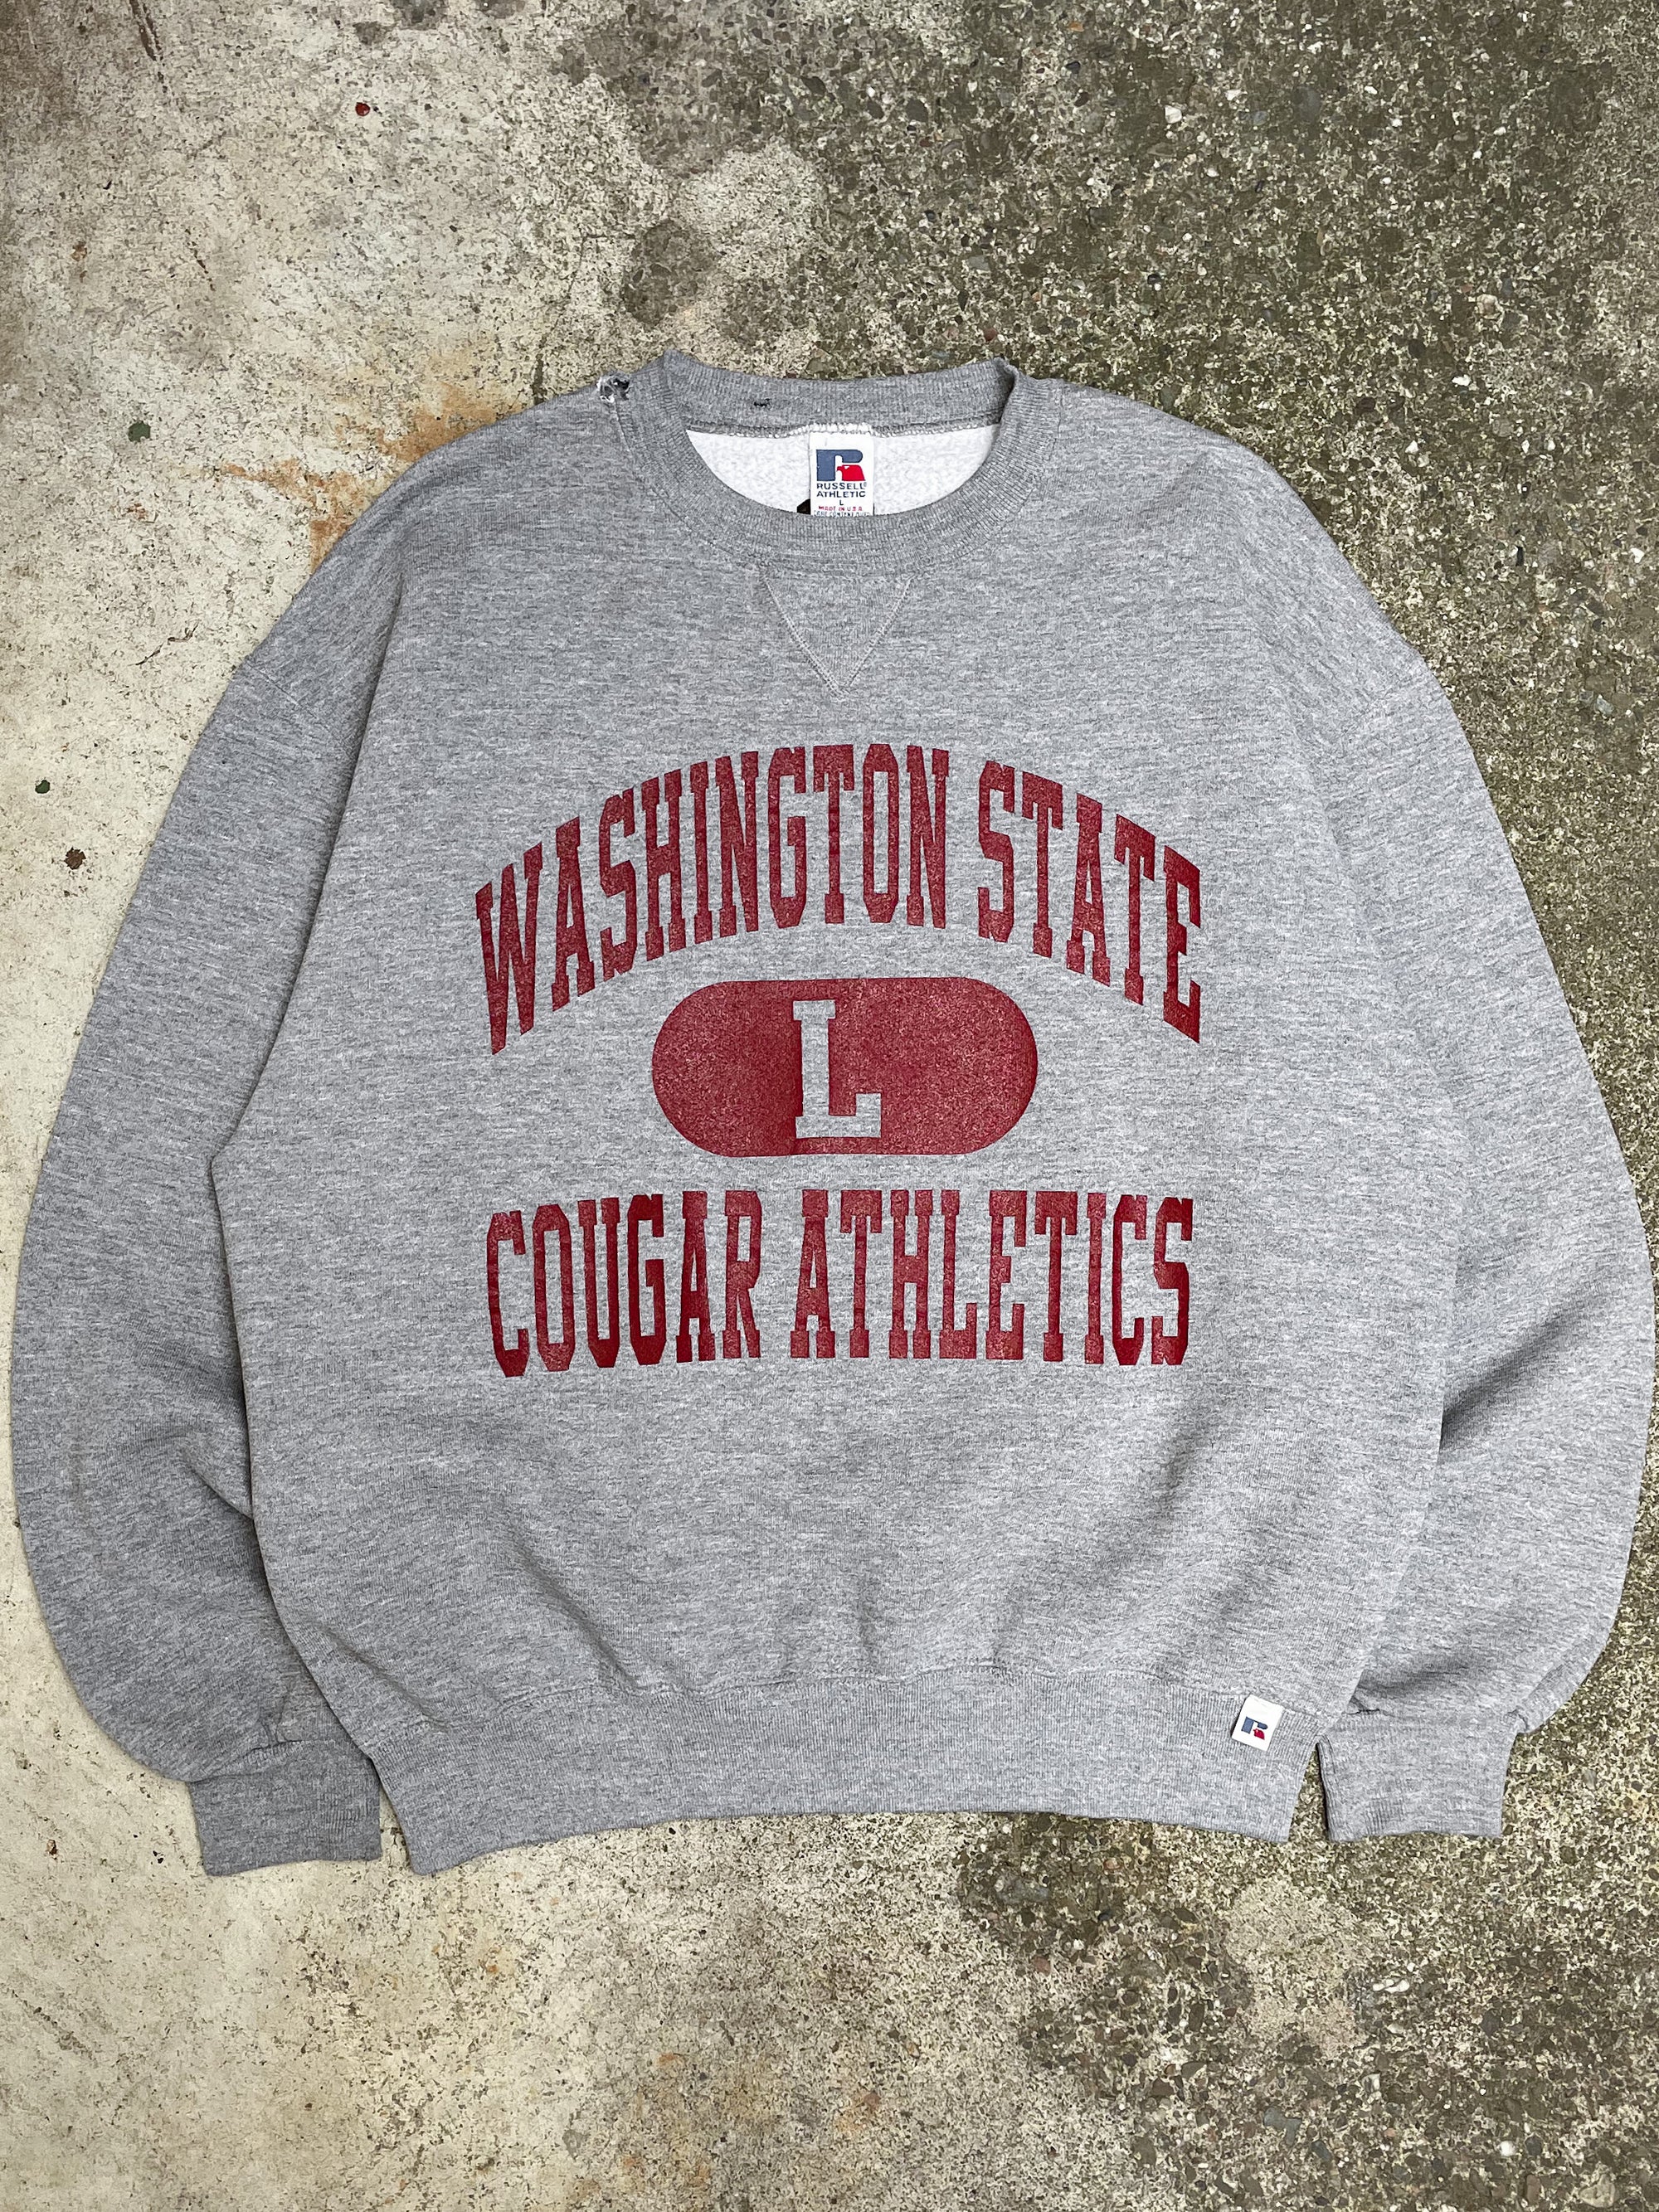 1990s Russell “Washington State” Sweatshirt (L)